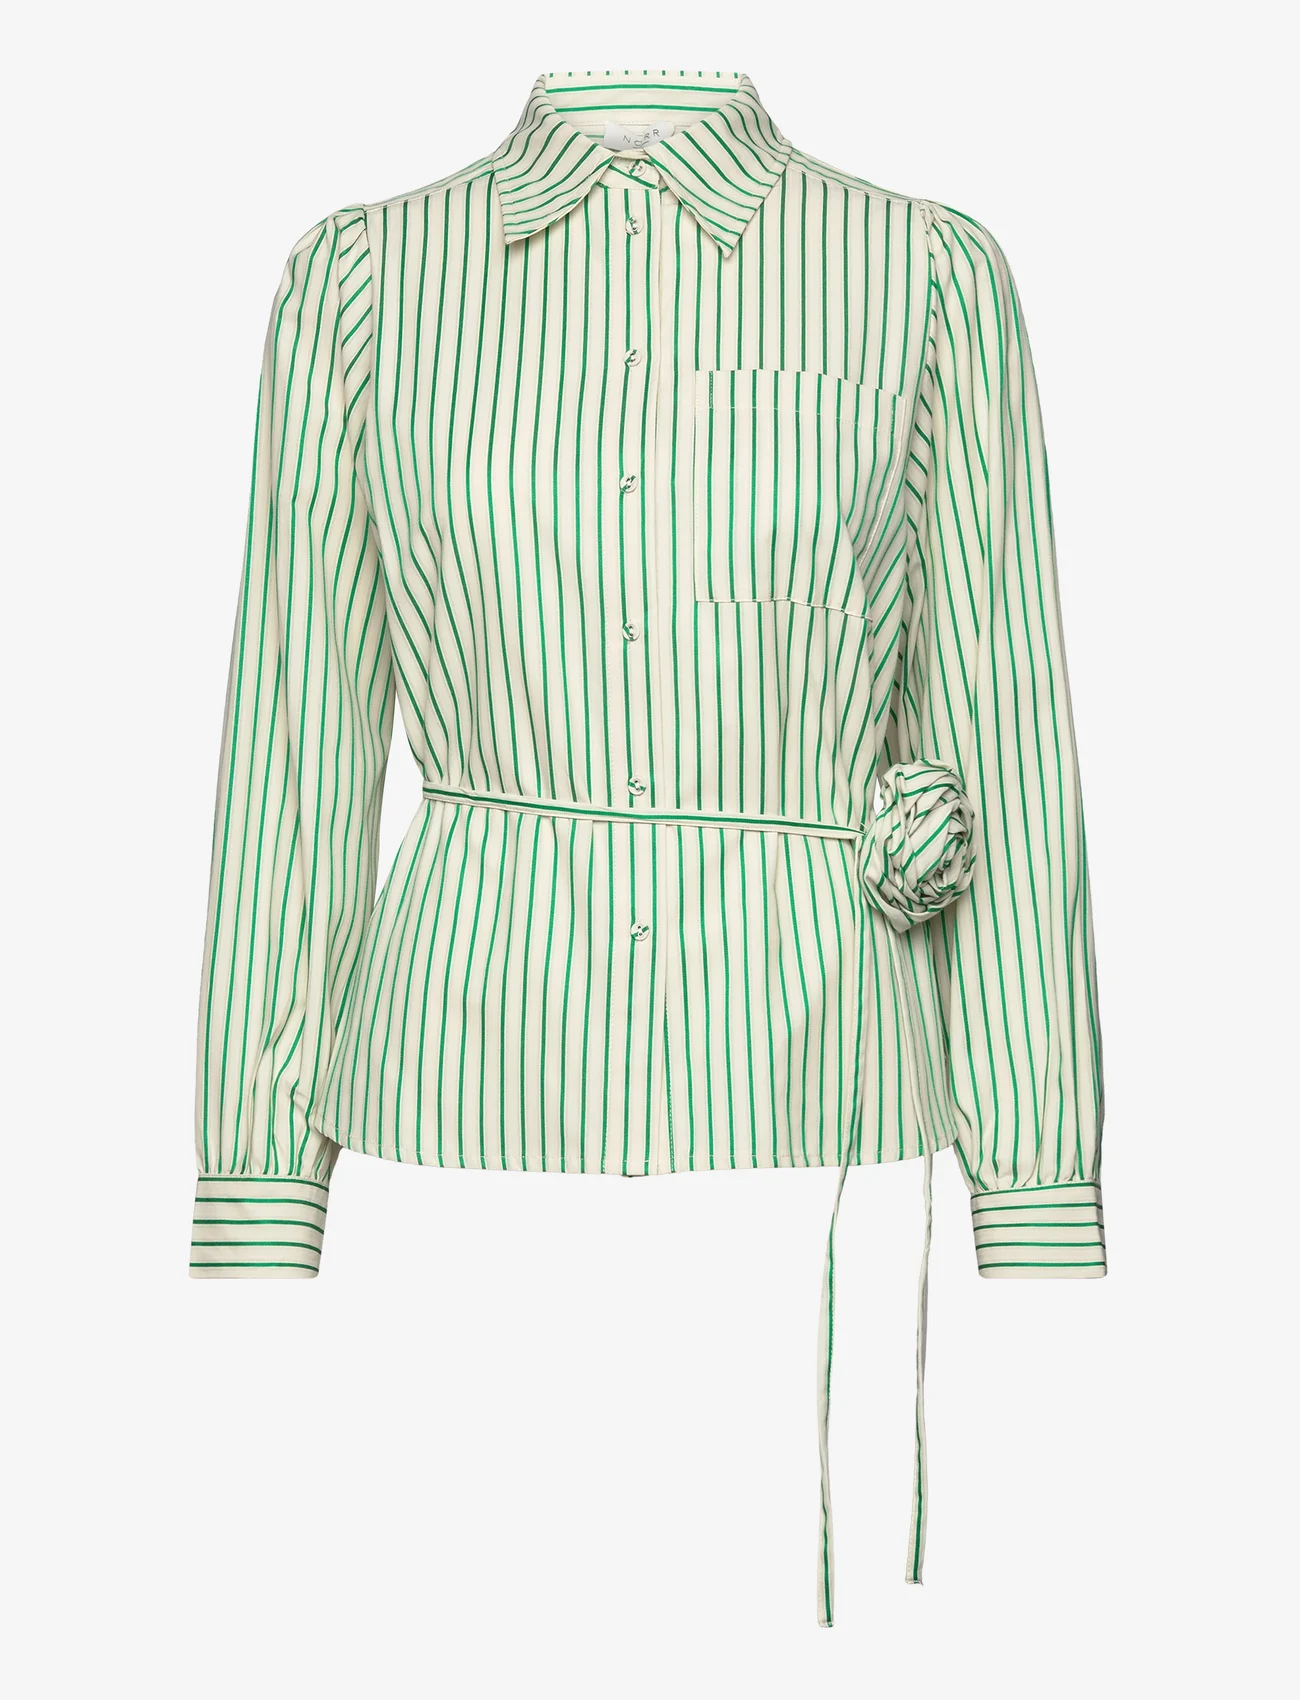 NORR - Linna shirt - long-sleeved shirts - bright green stripe - 1